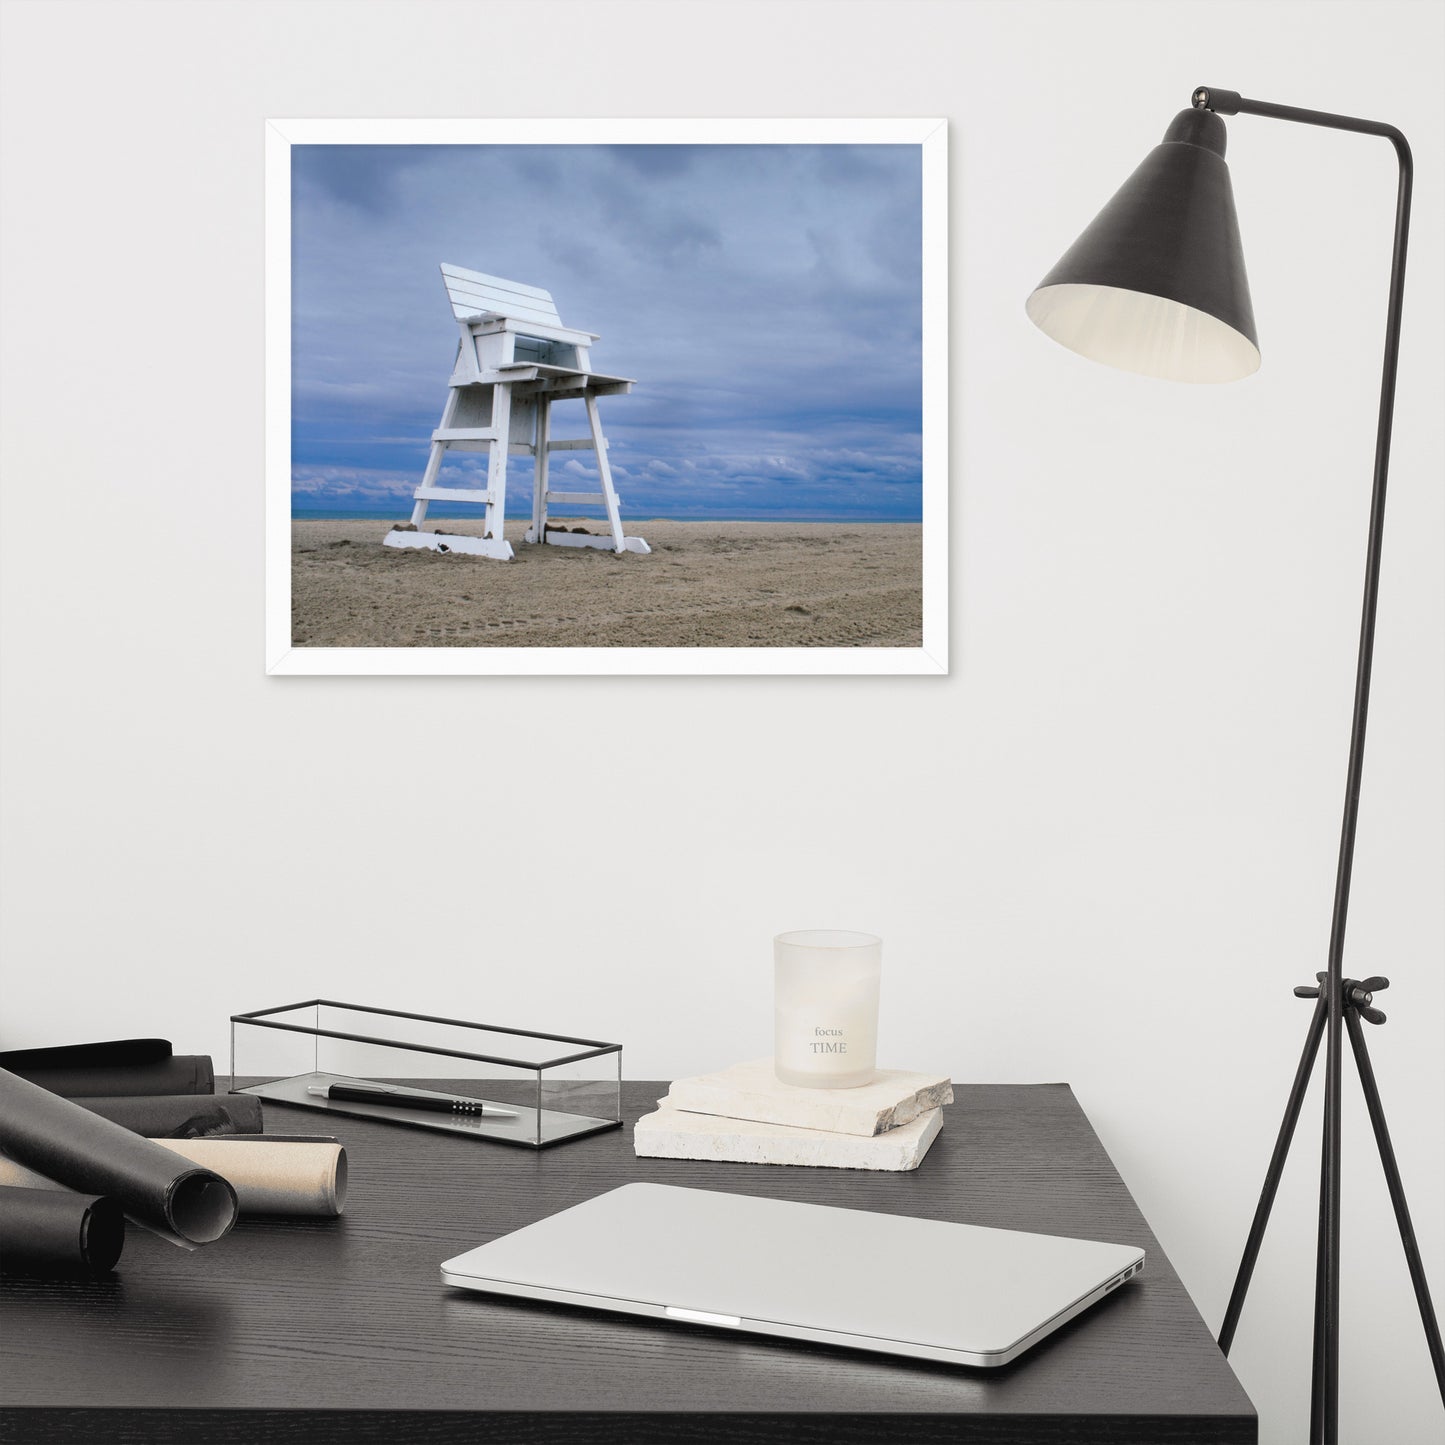 Contemporary Wall Art For Office: Approaching Storm - Coastal / Beach / Seascape / Nature / Landscape Photo Framed Wall Art Print - Artwork